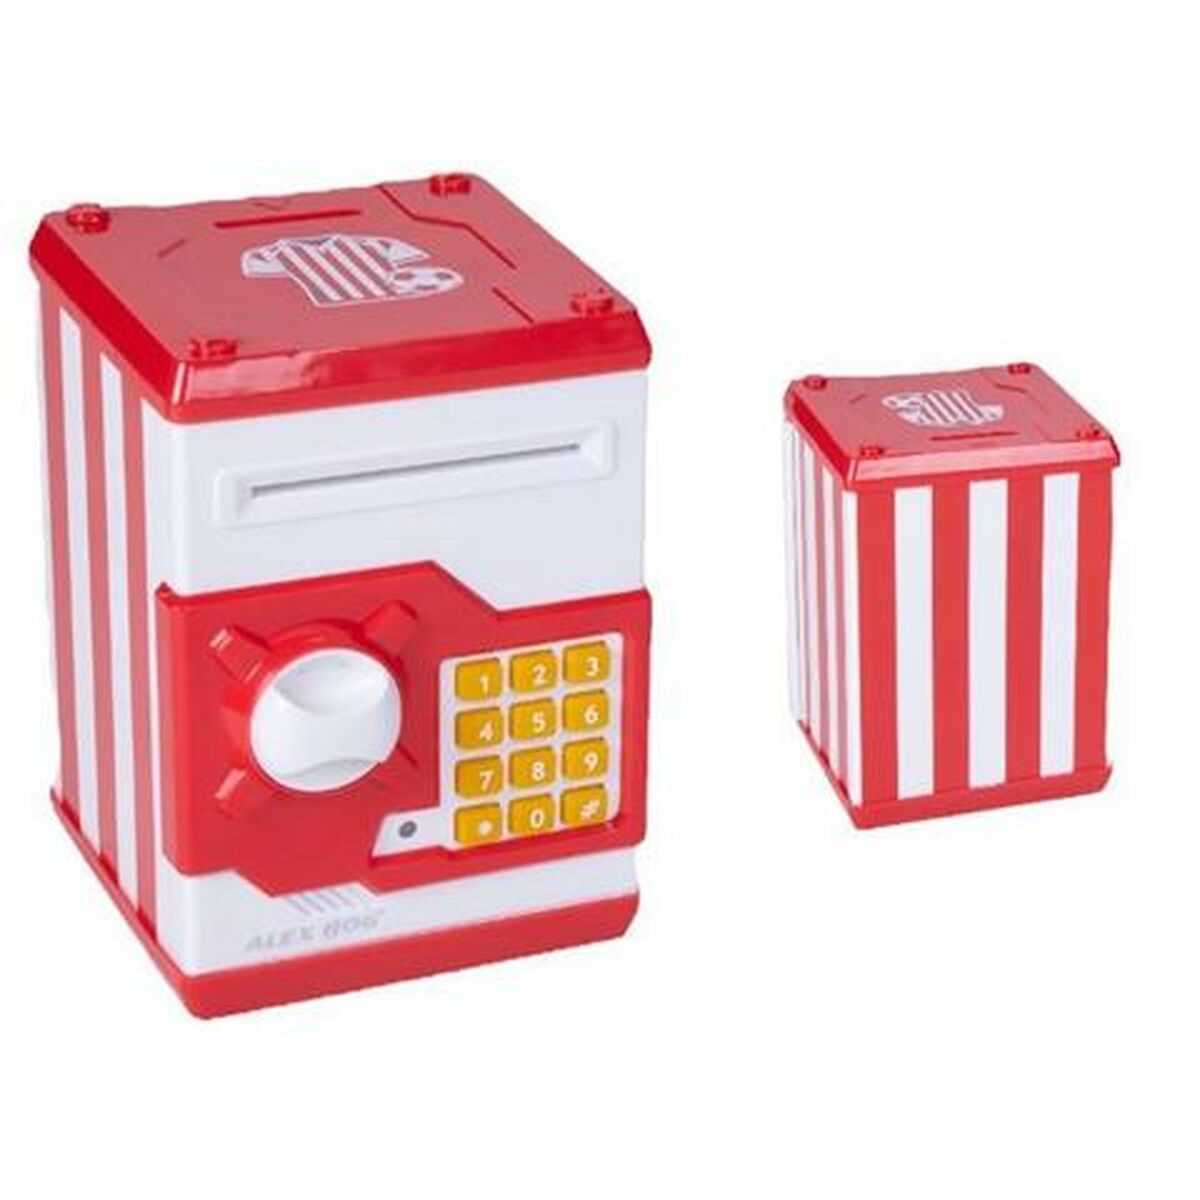 Money box Roymart Atlético de Madrid Safety-deposit box (18 x 13 x 12 cm)